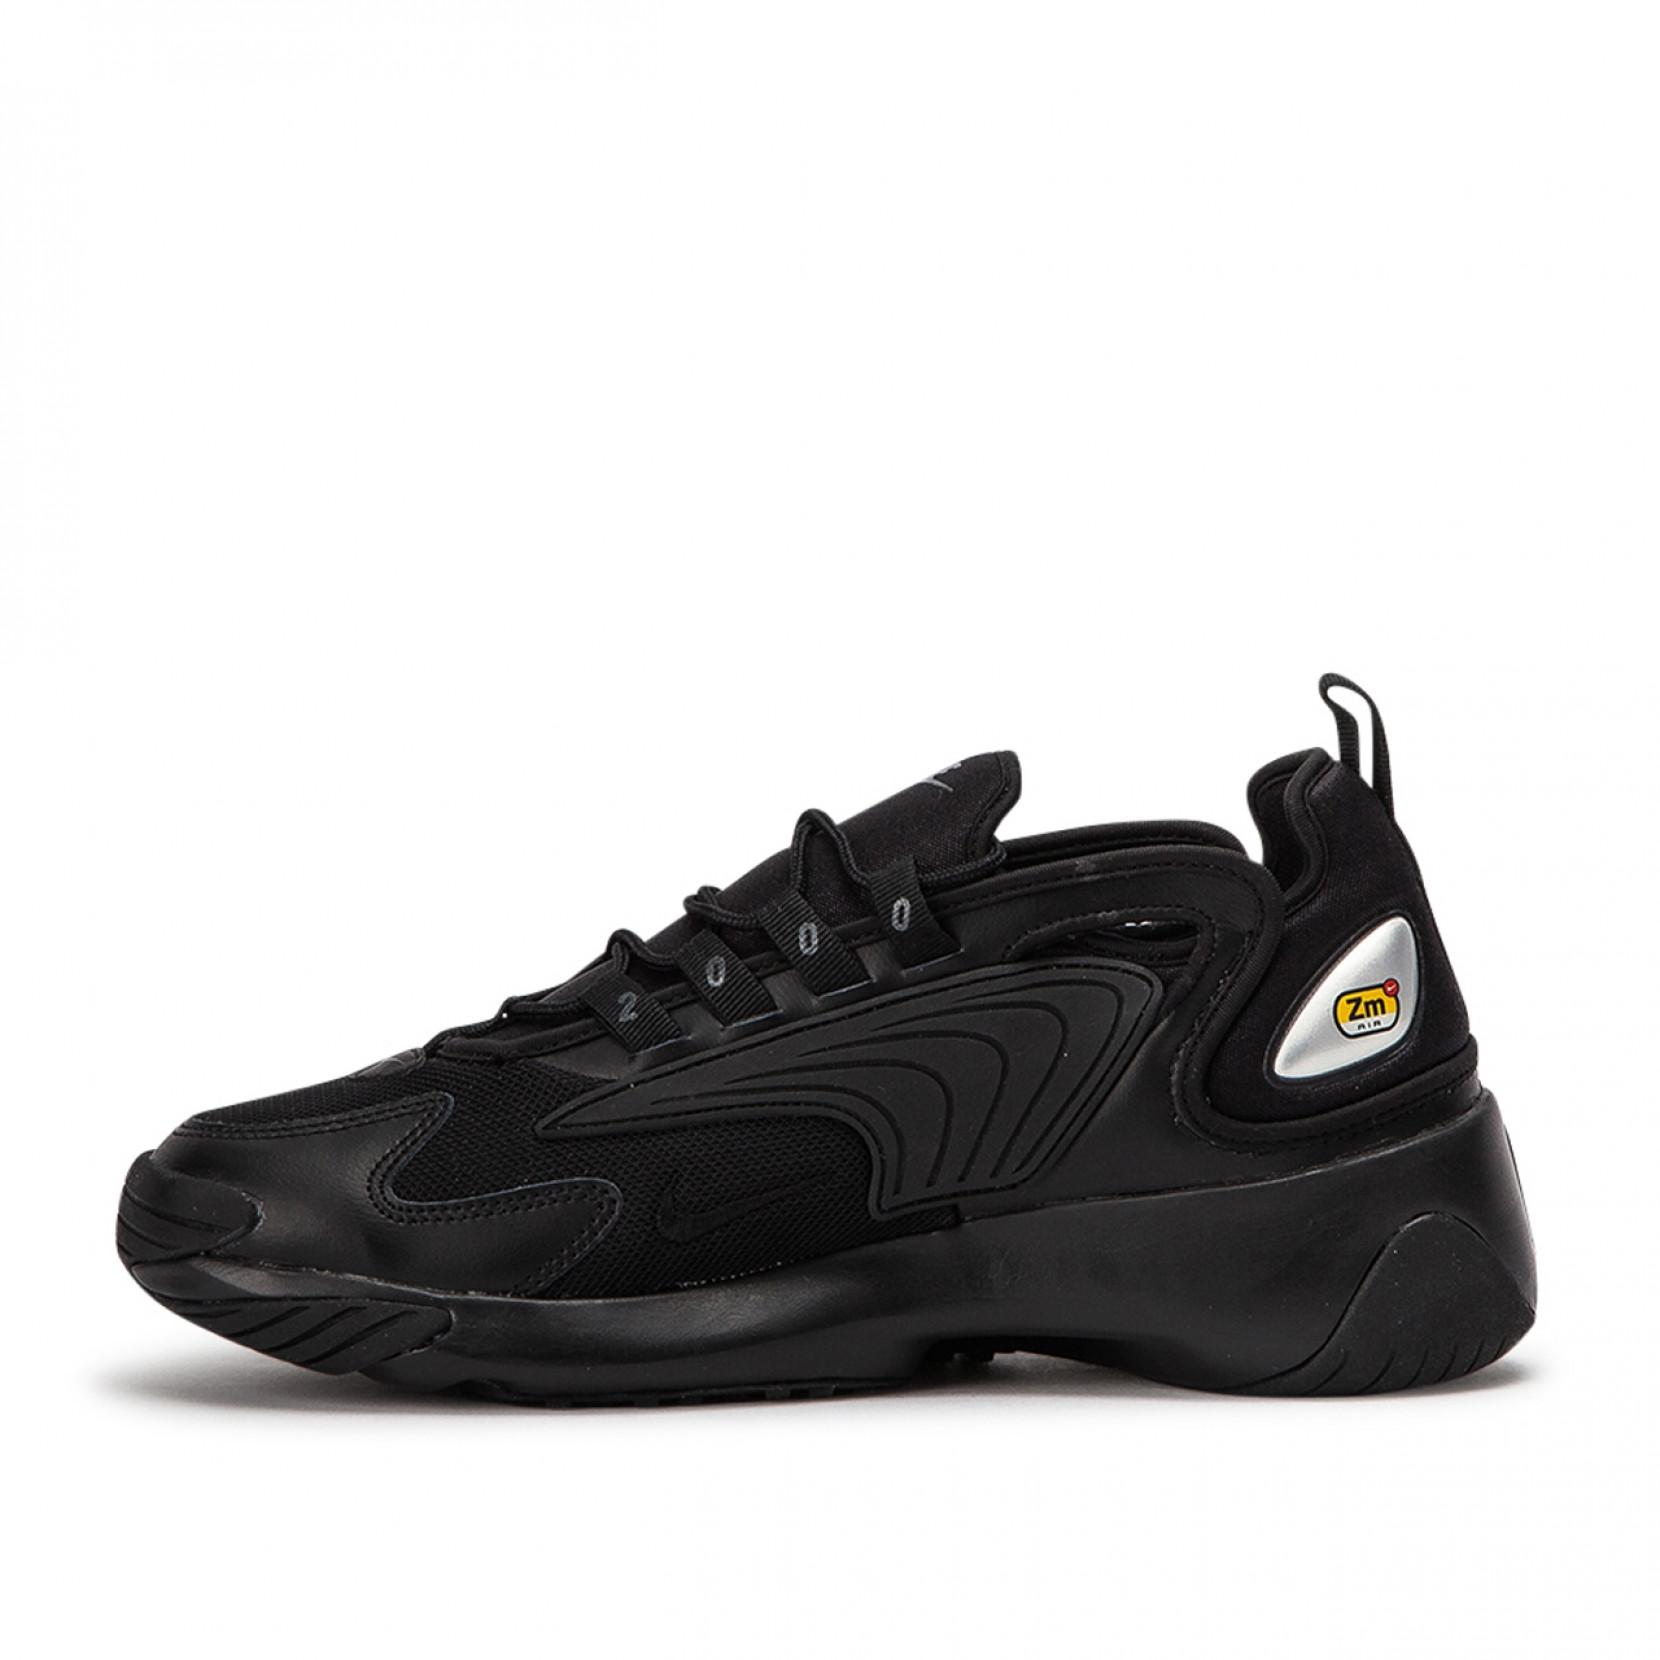 Nike Zoom 2k Shoe in Black/Anthracite (Black) for Men - Lyst